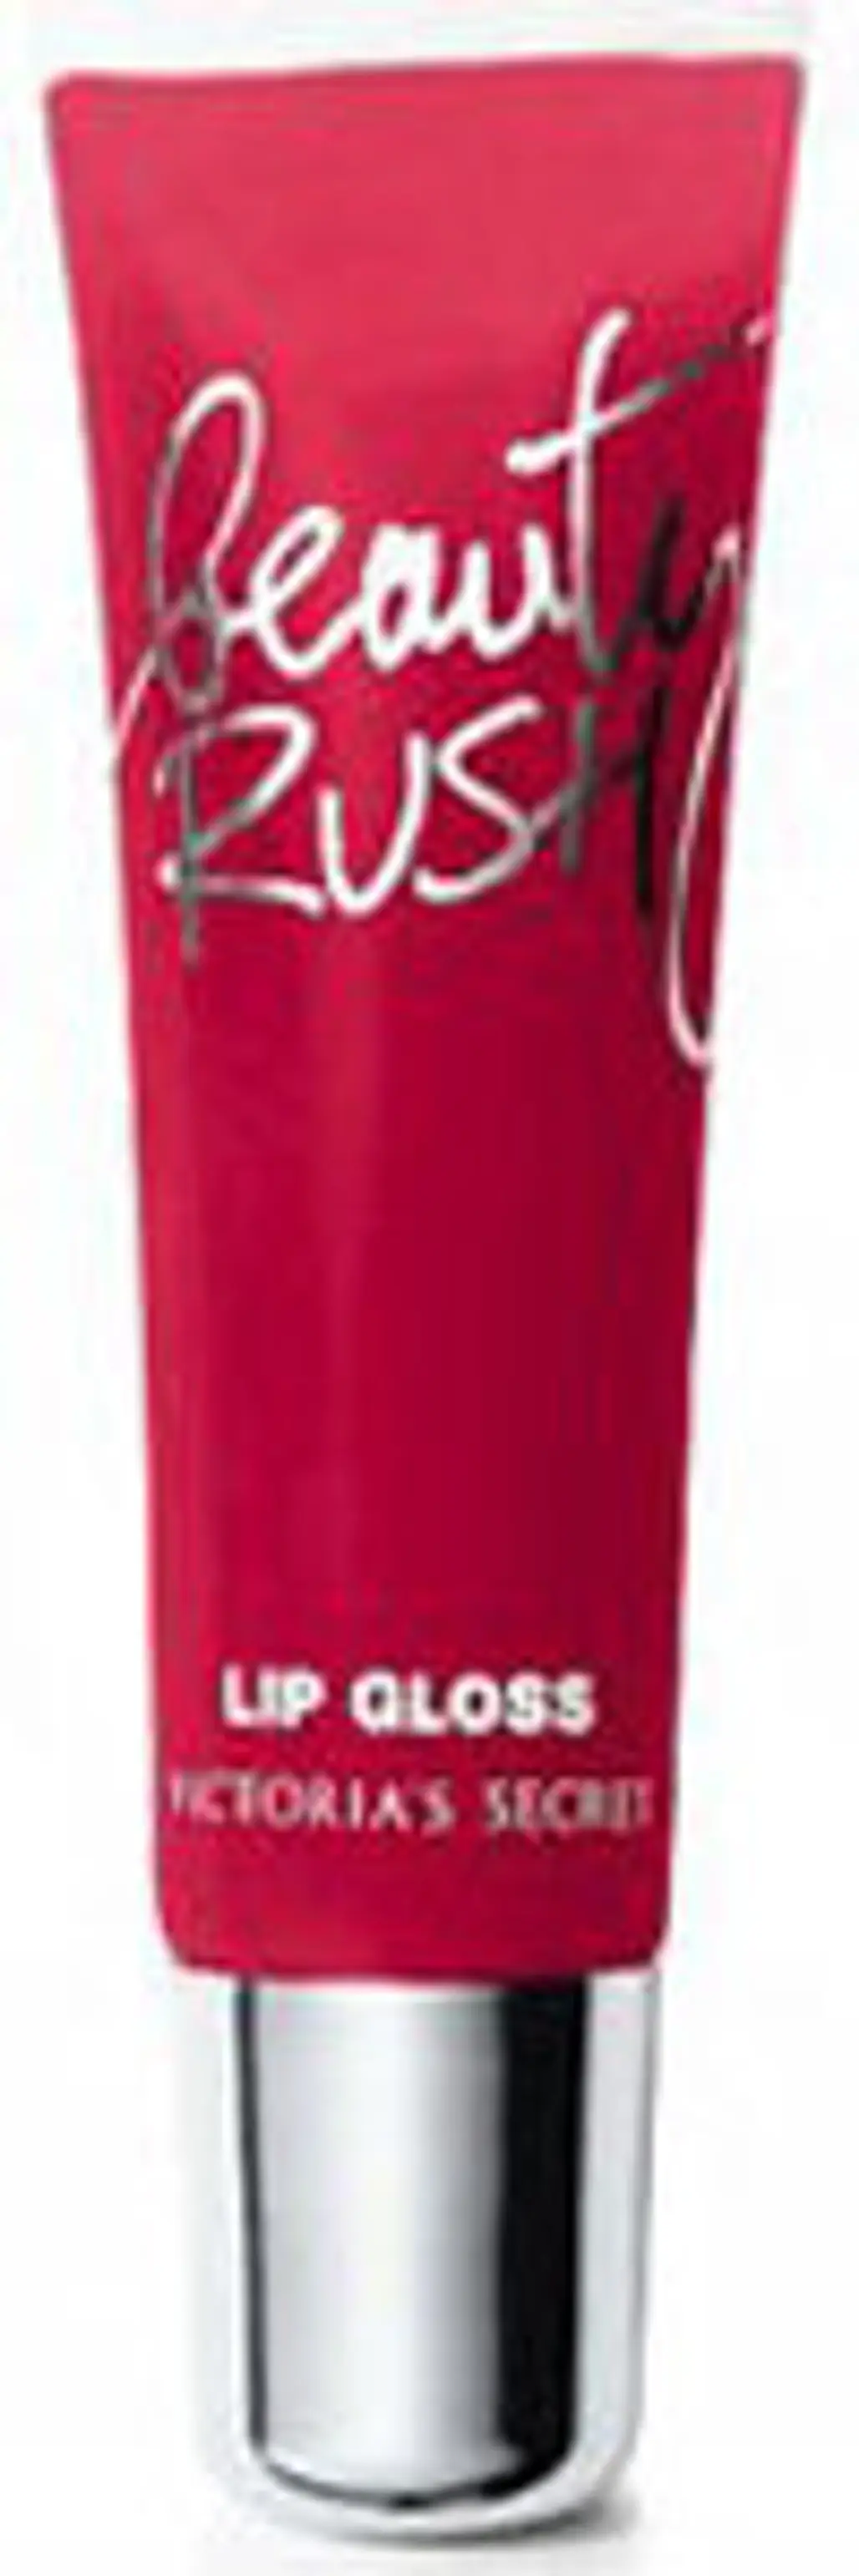 Victoria's Secret Beauty Rush Lip Gloss